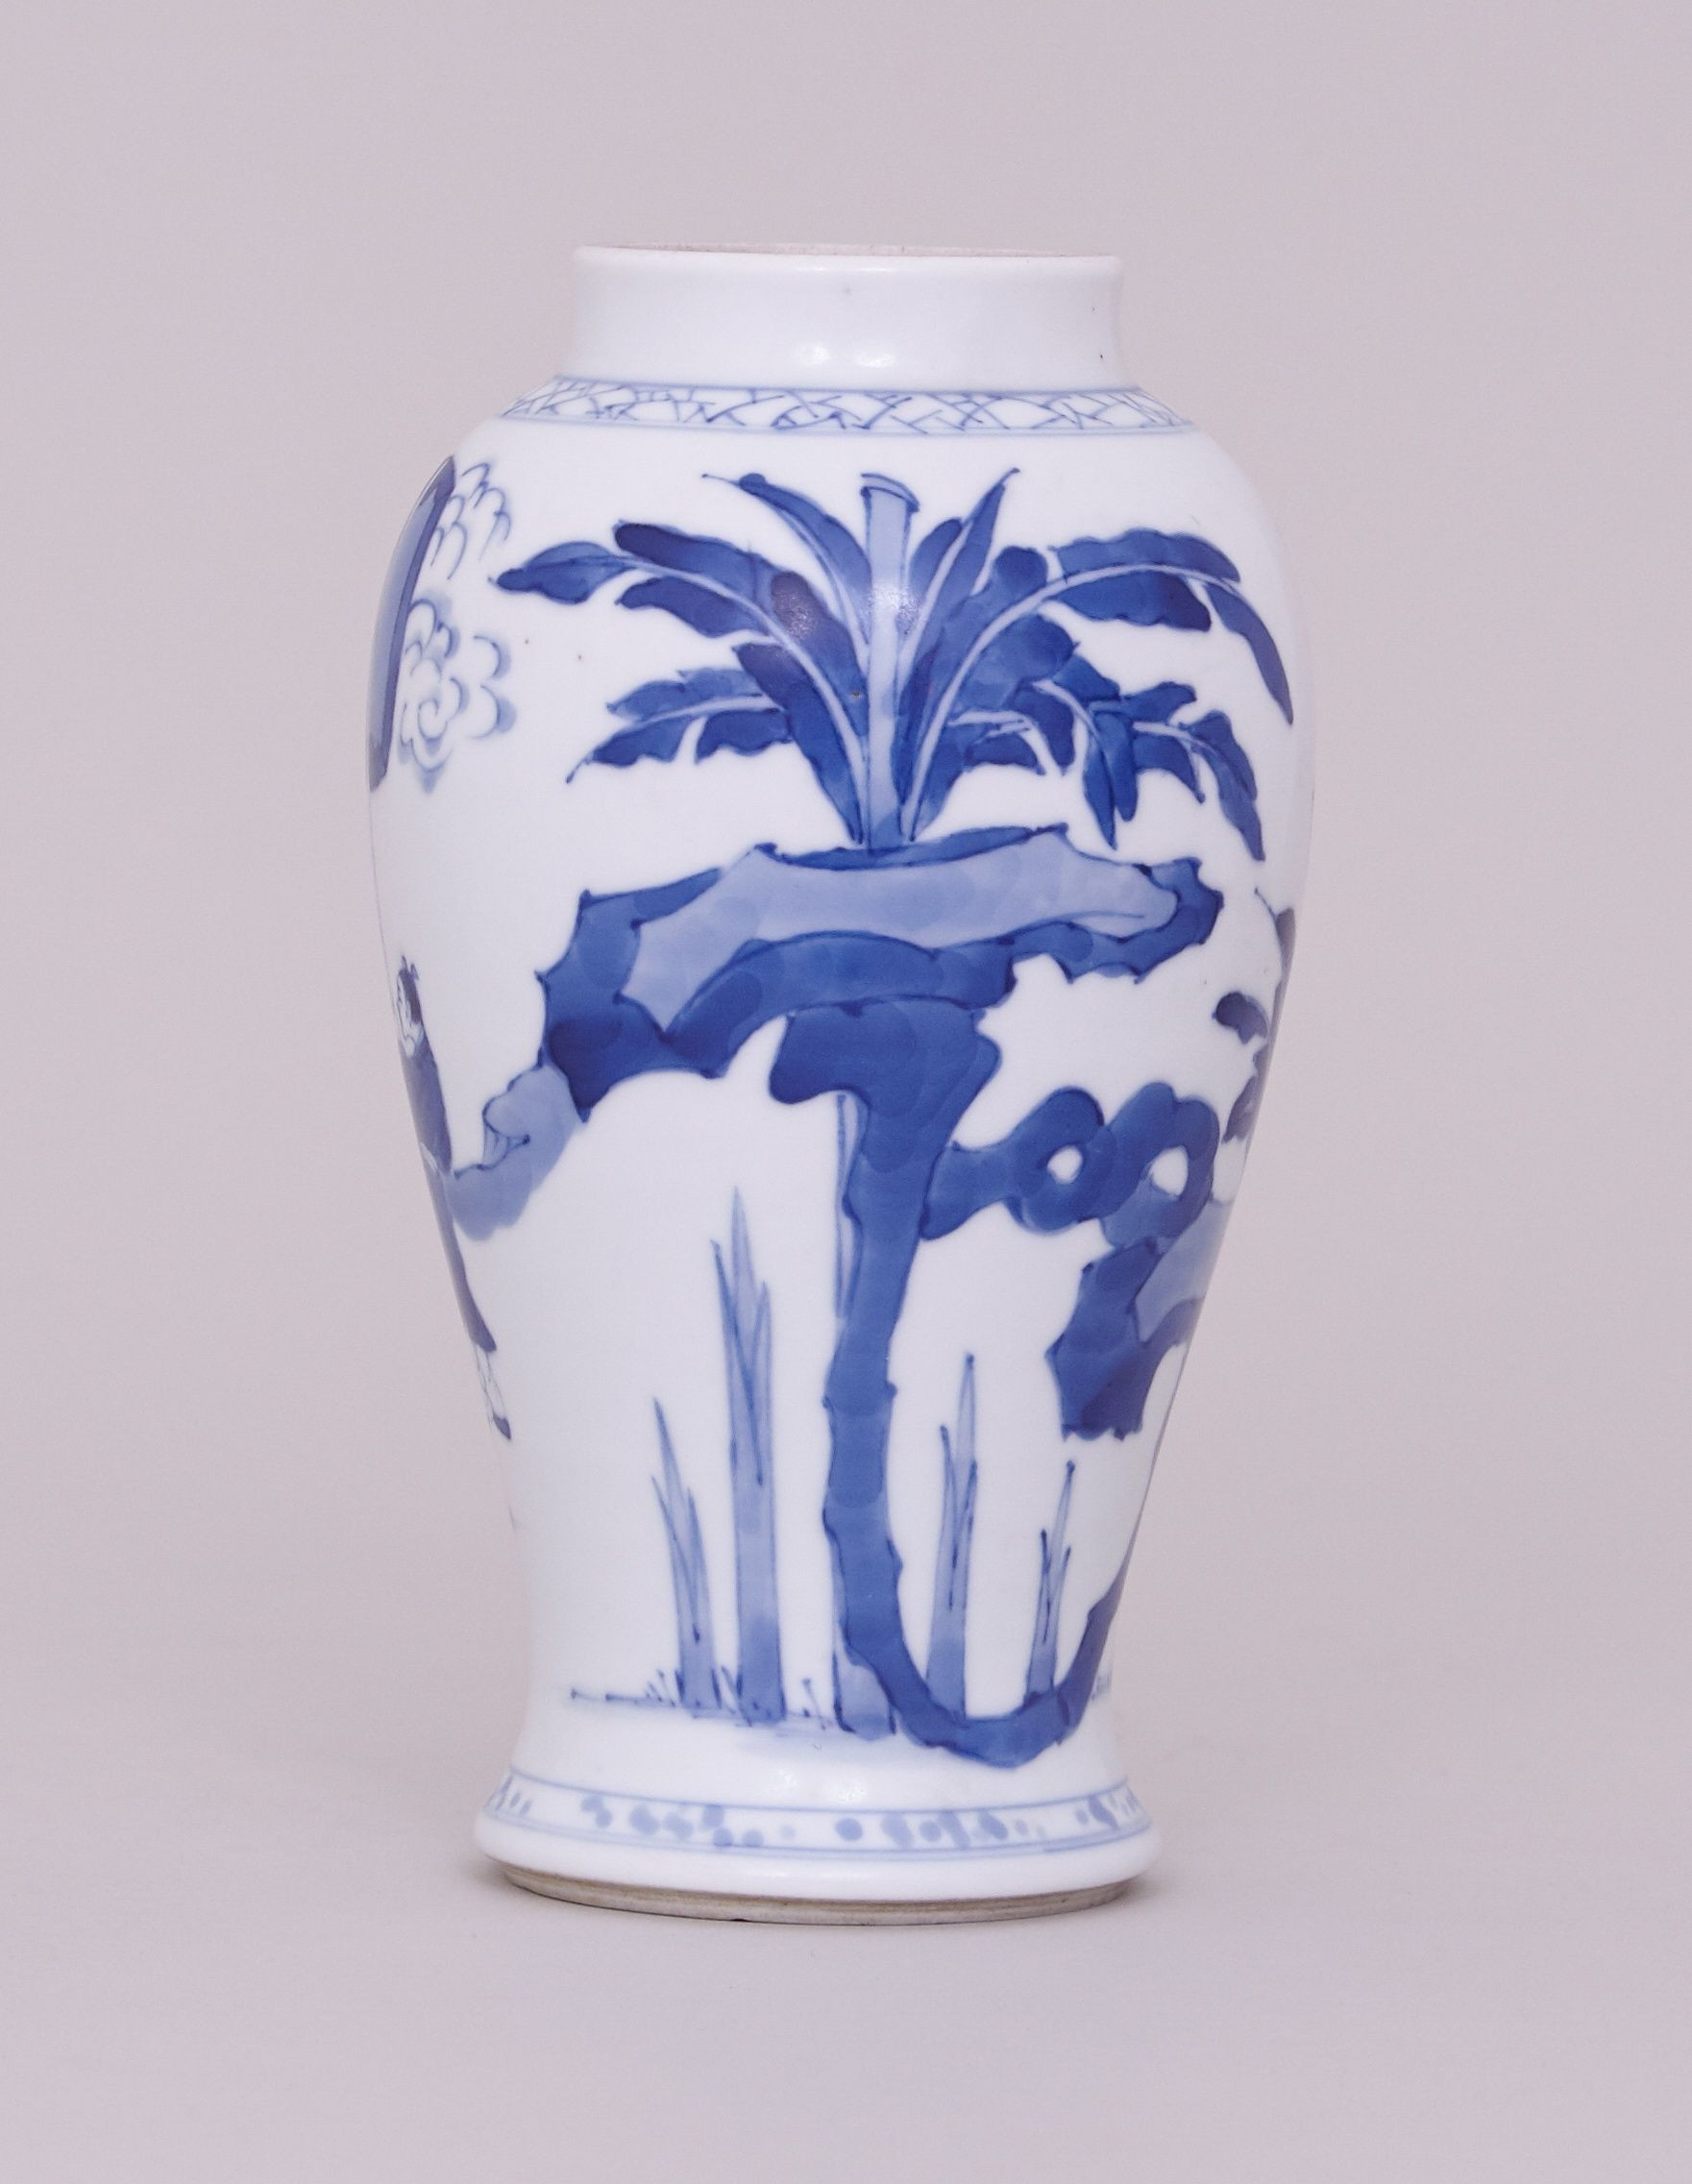 12 Elegant Mccoy White Vase 2024 free download mccoy white vase of blue white vase lovely a chinese blue and white vase kangxi 1662 pertaining to blue white vase lovely a chinese blue and white vase kangxi 1662 1722